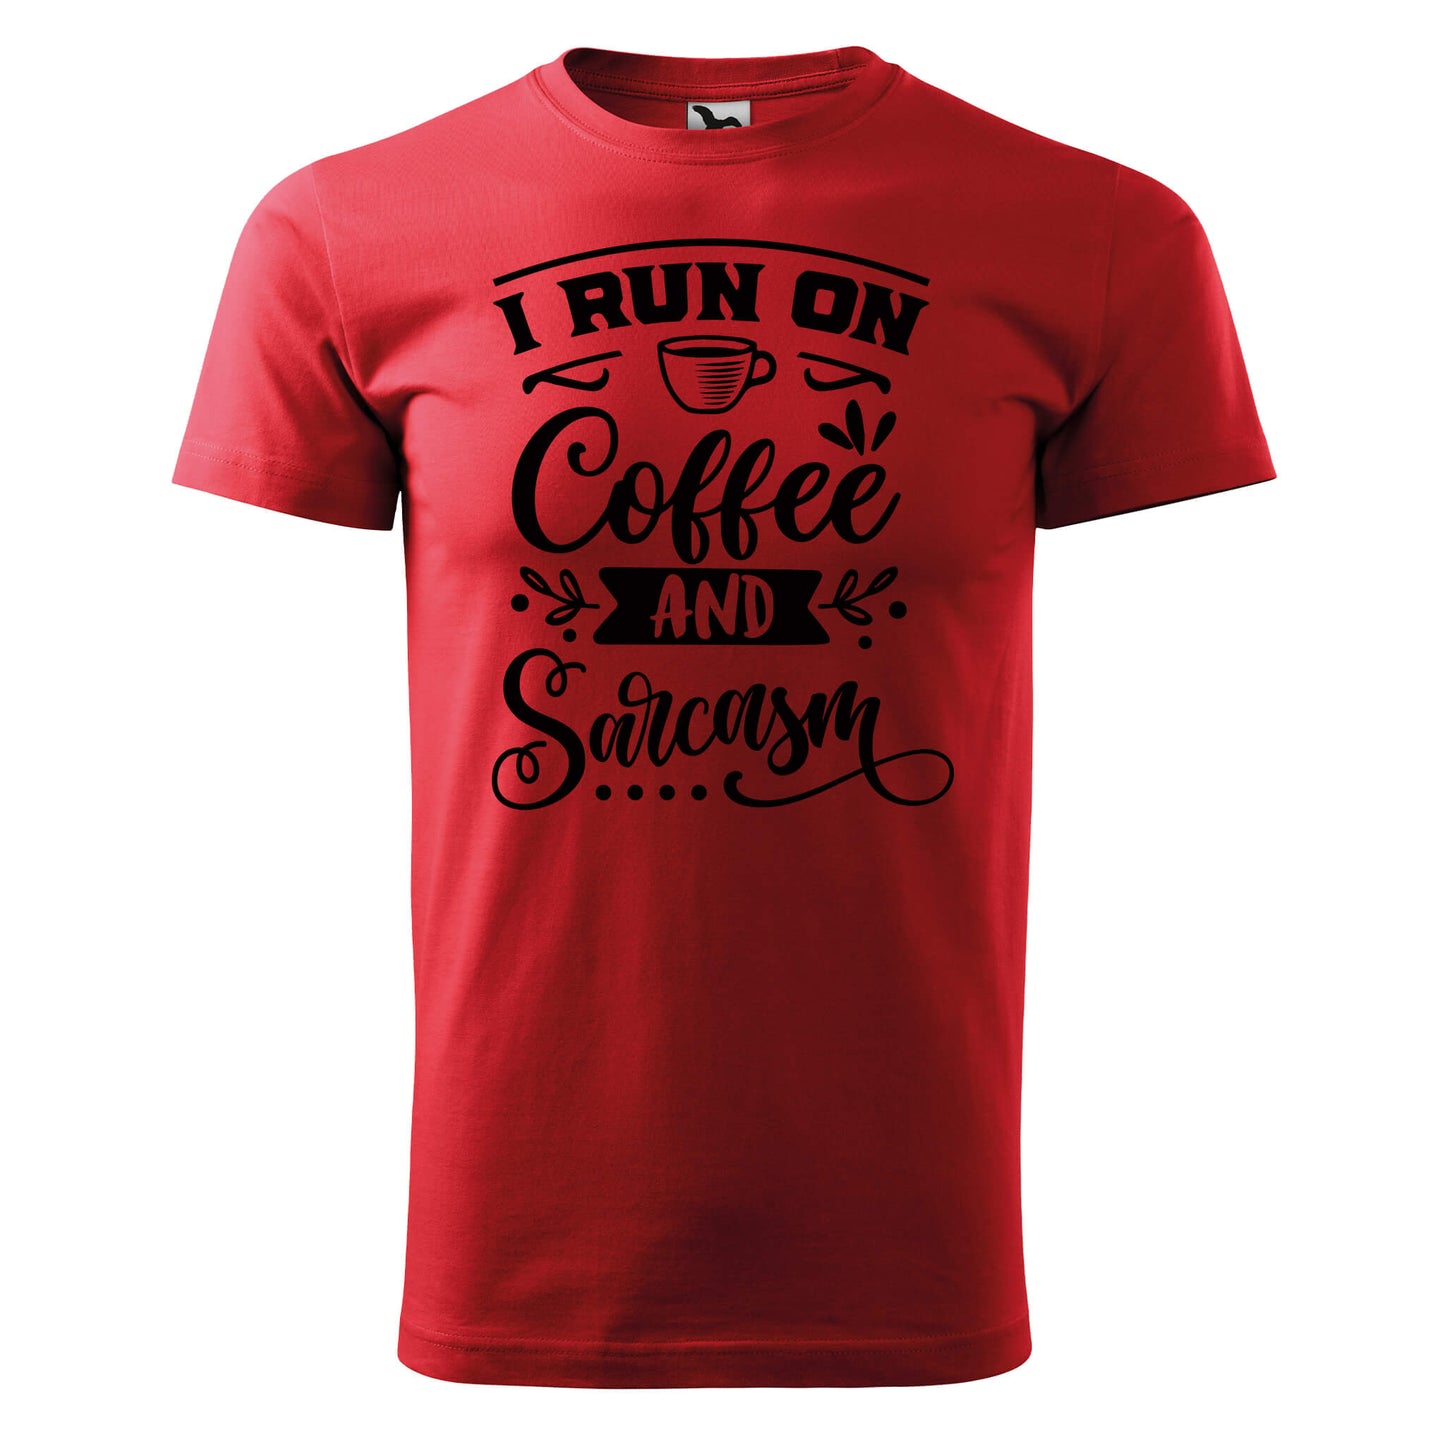 I run on coffee and sarcasm t-shirt - rvdesignprint